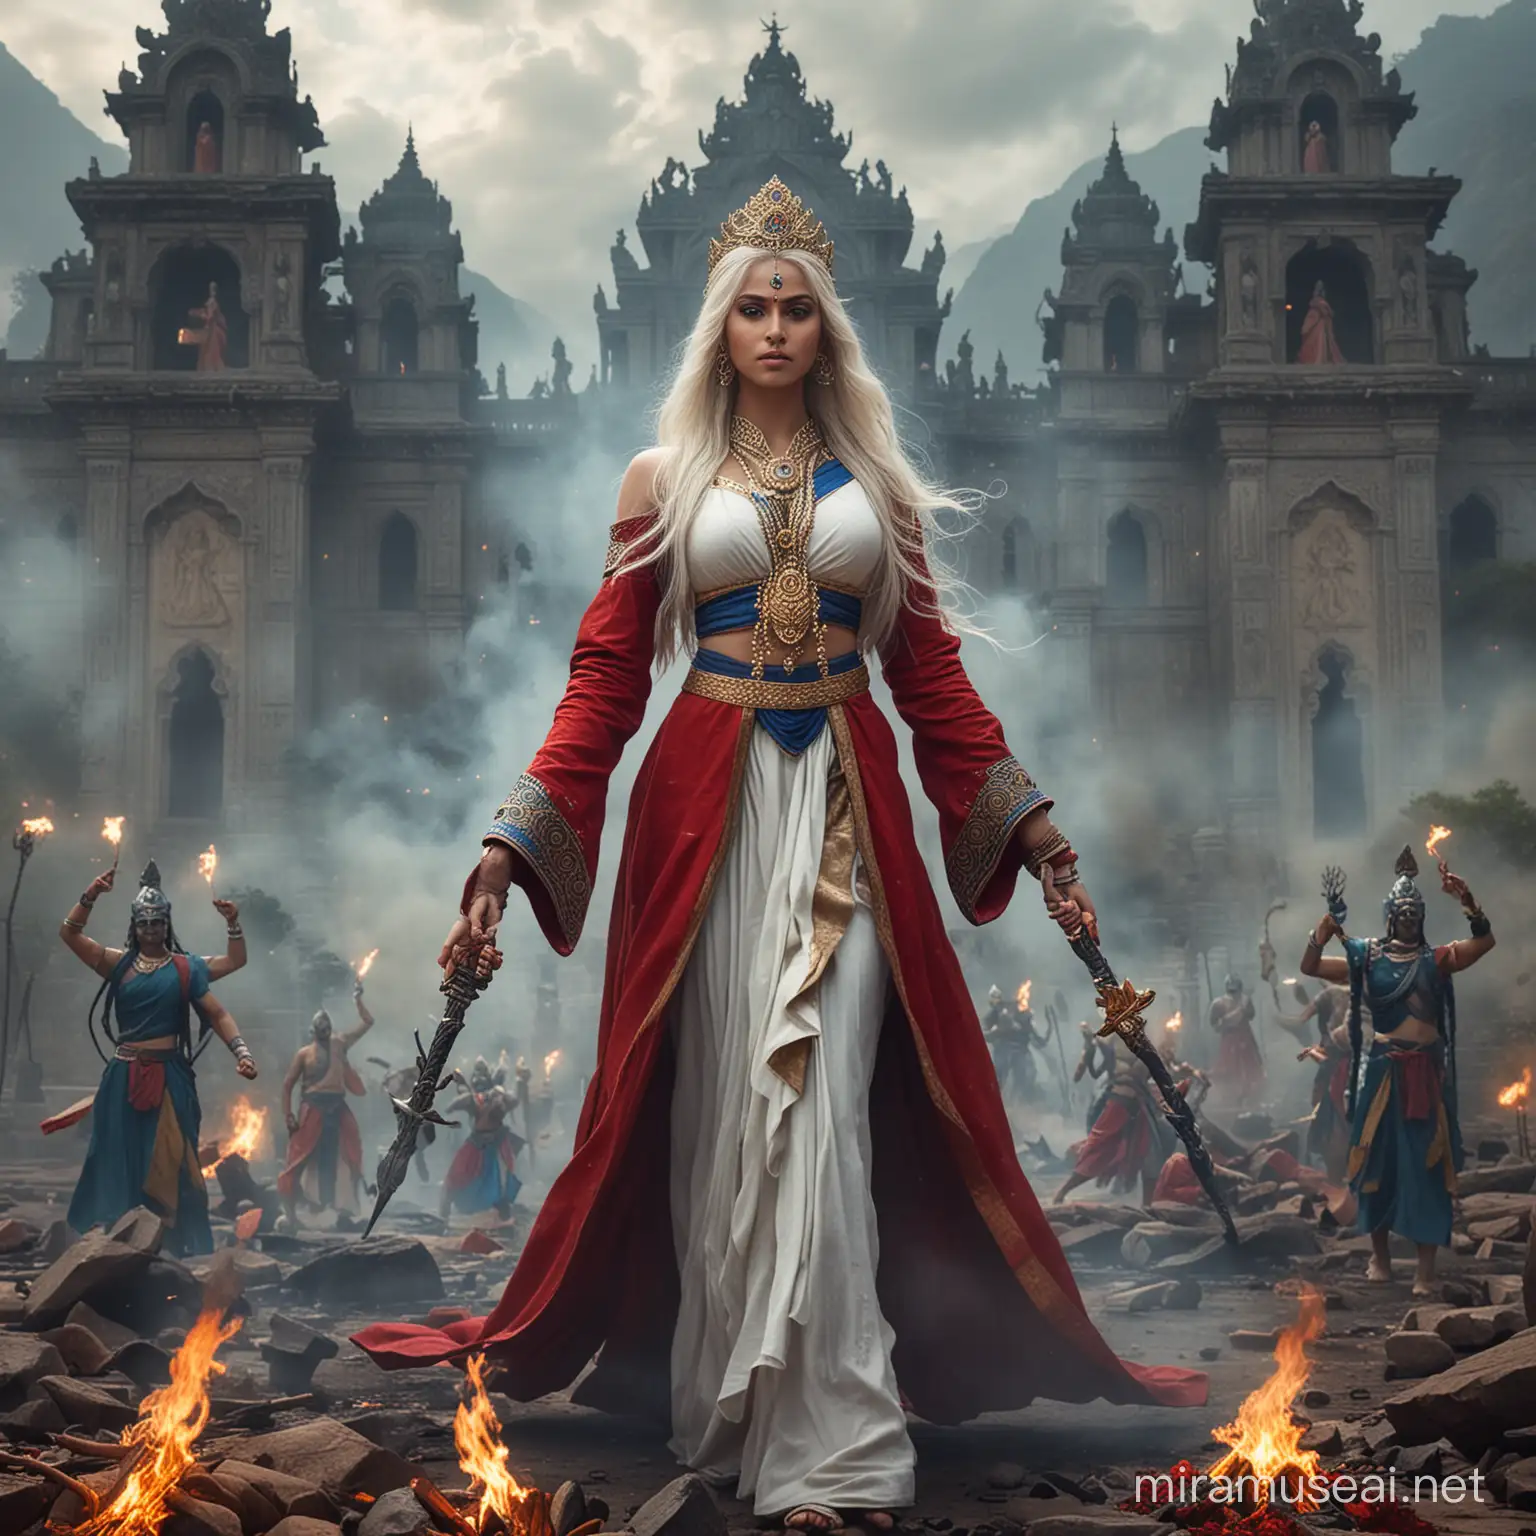 Powerful Hindu Empress Goddess Surrounded by Demonic Deities in Fiery Combat